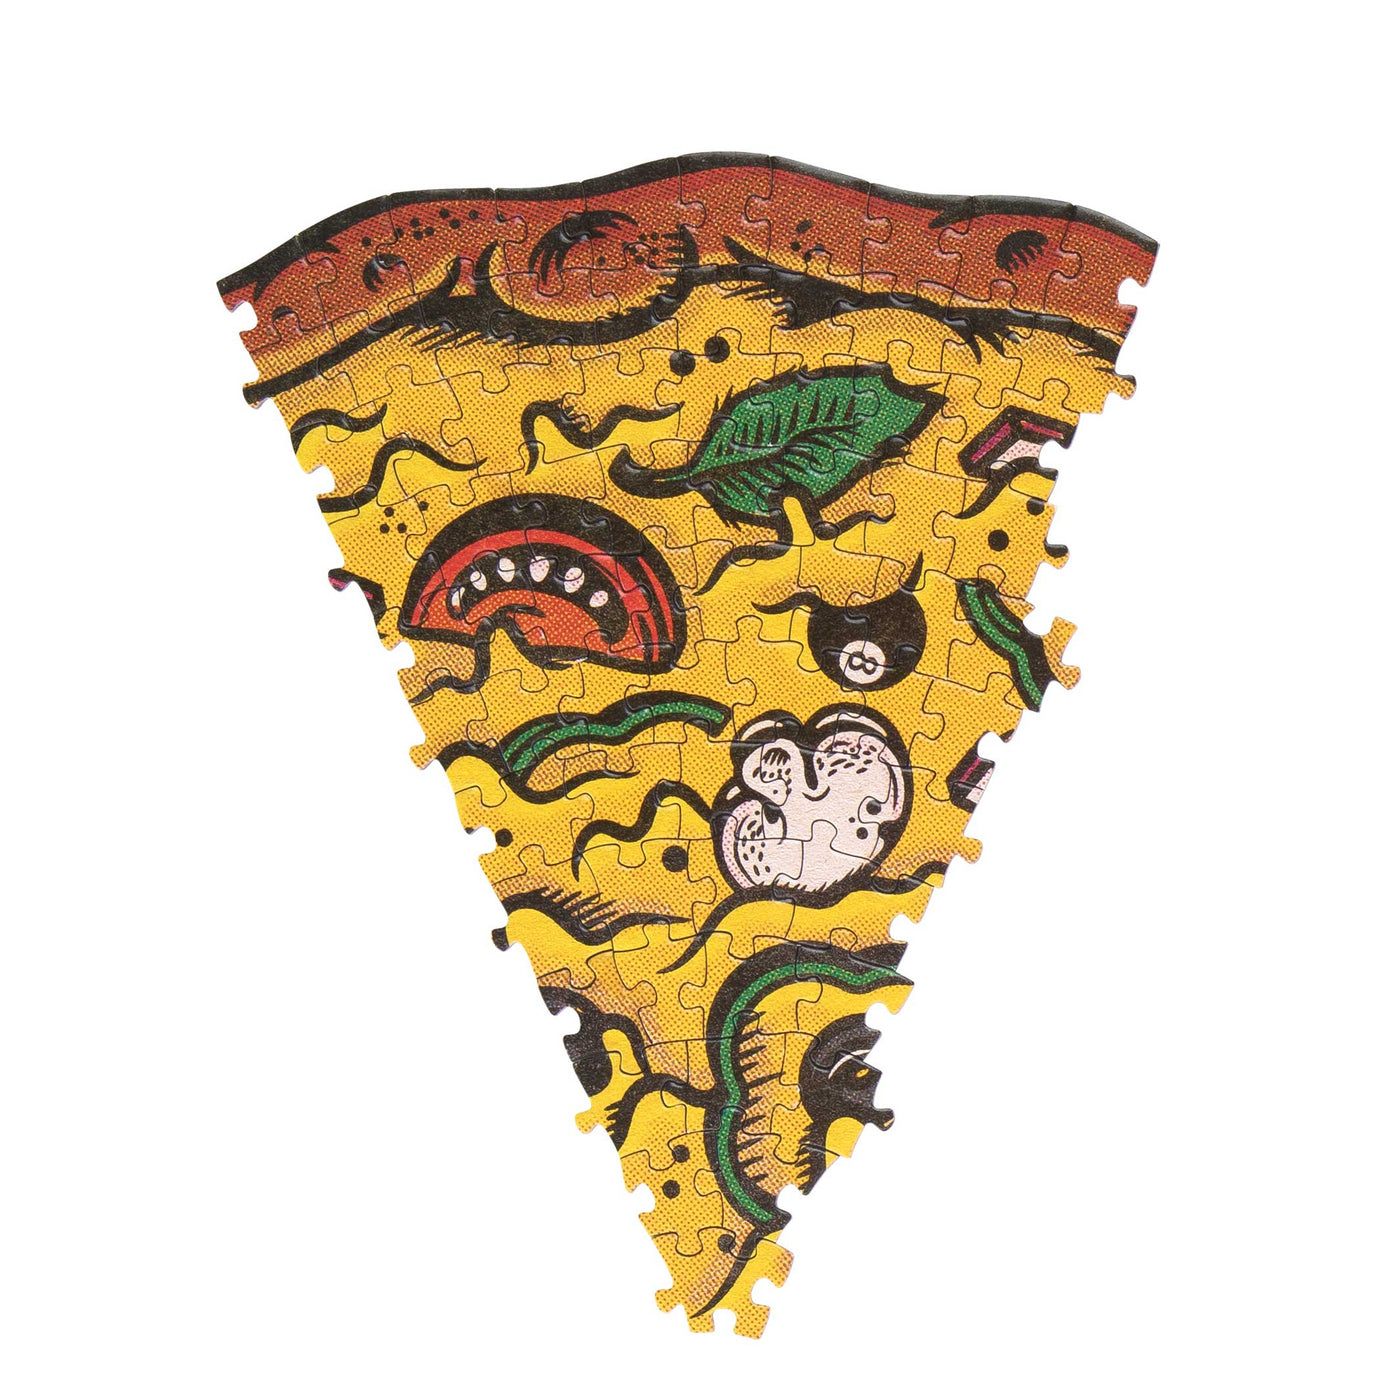 Single Slice of Pizza Puzzle Veggie Supreme Jigsaw Puzzle Assembled